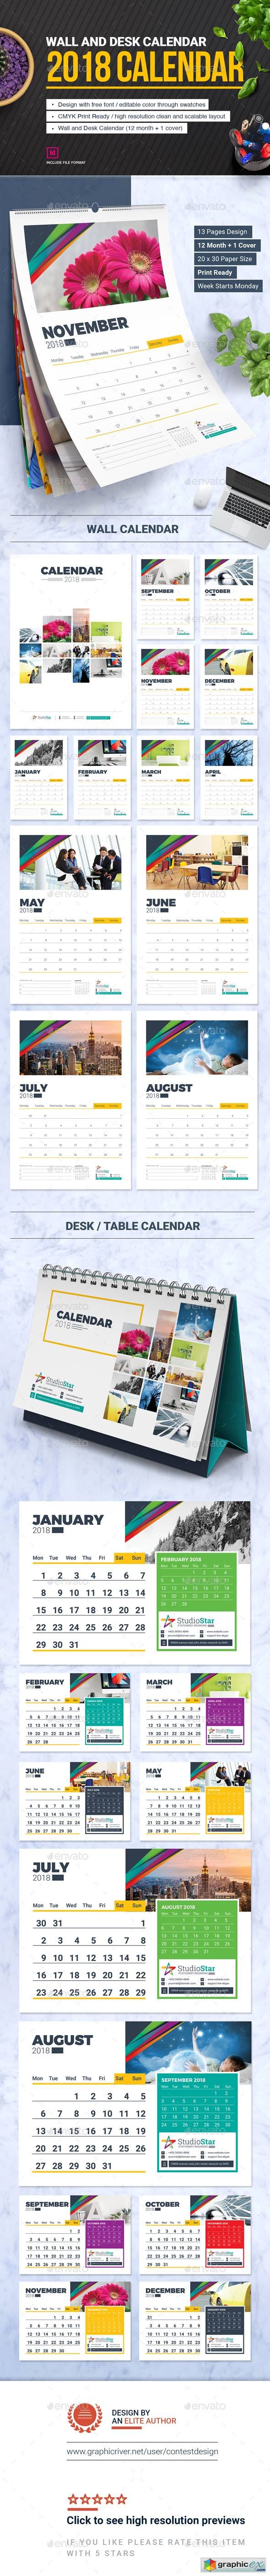 2018 Calendar Design Template | Wall and Desk / Table Calendar 2018